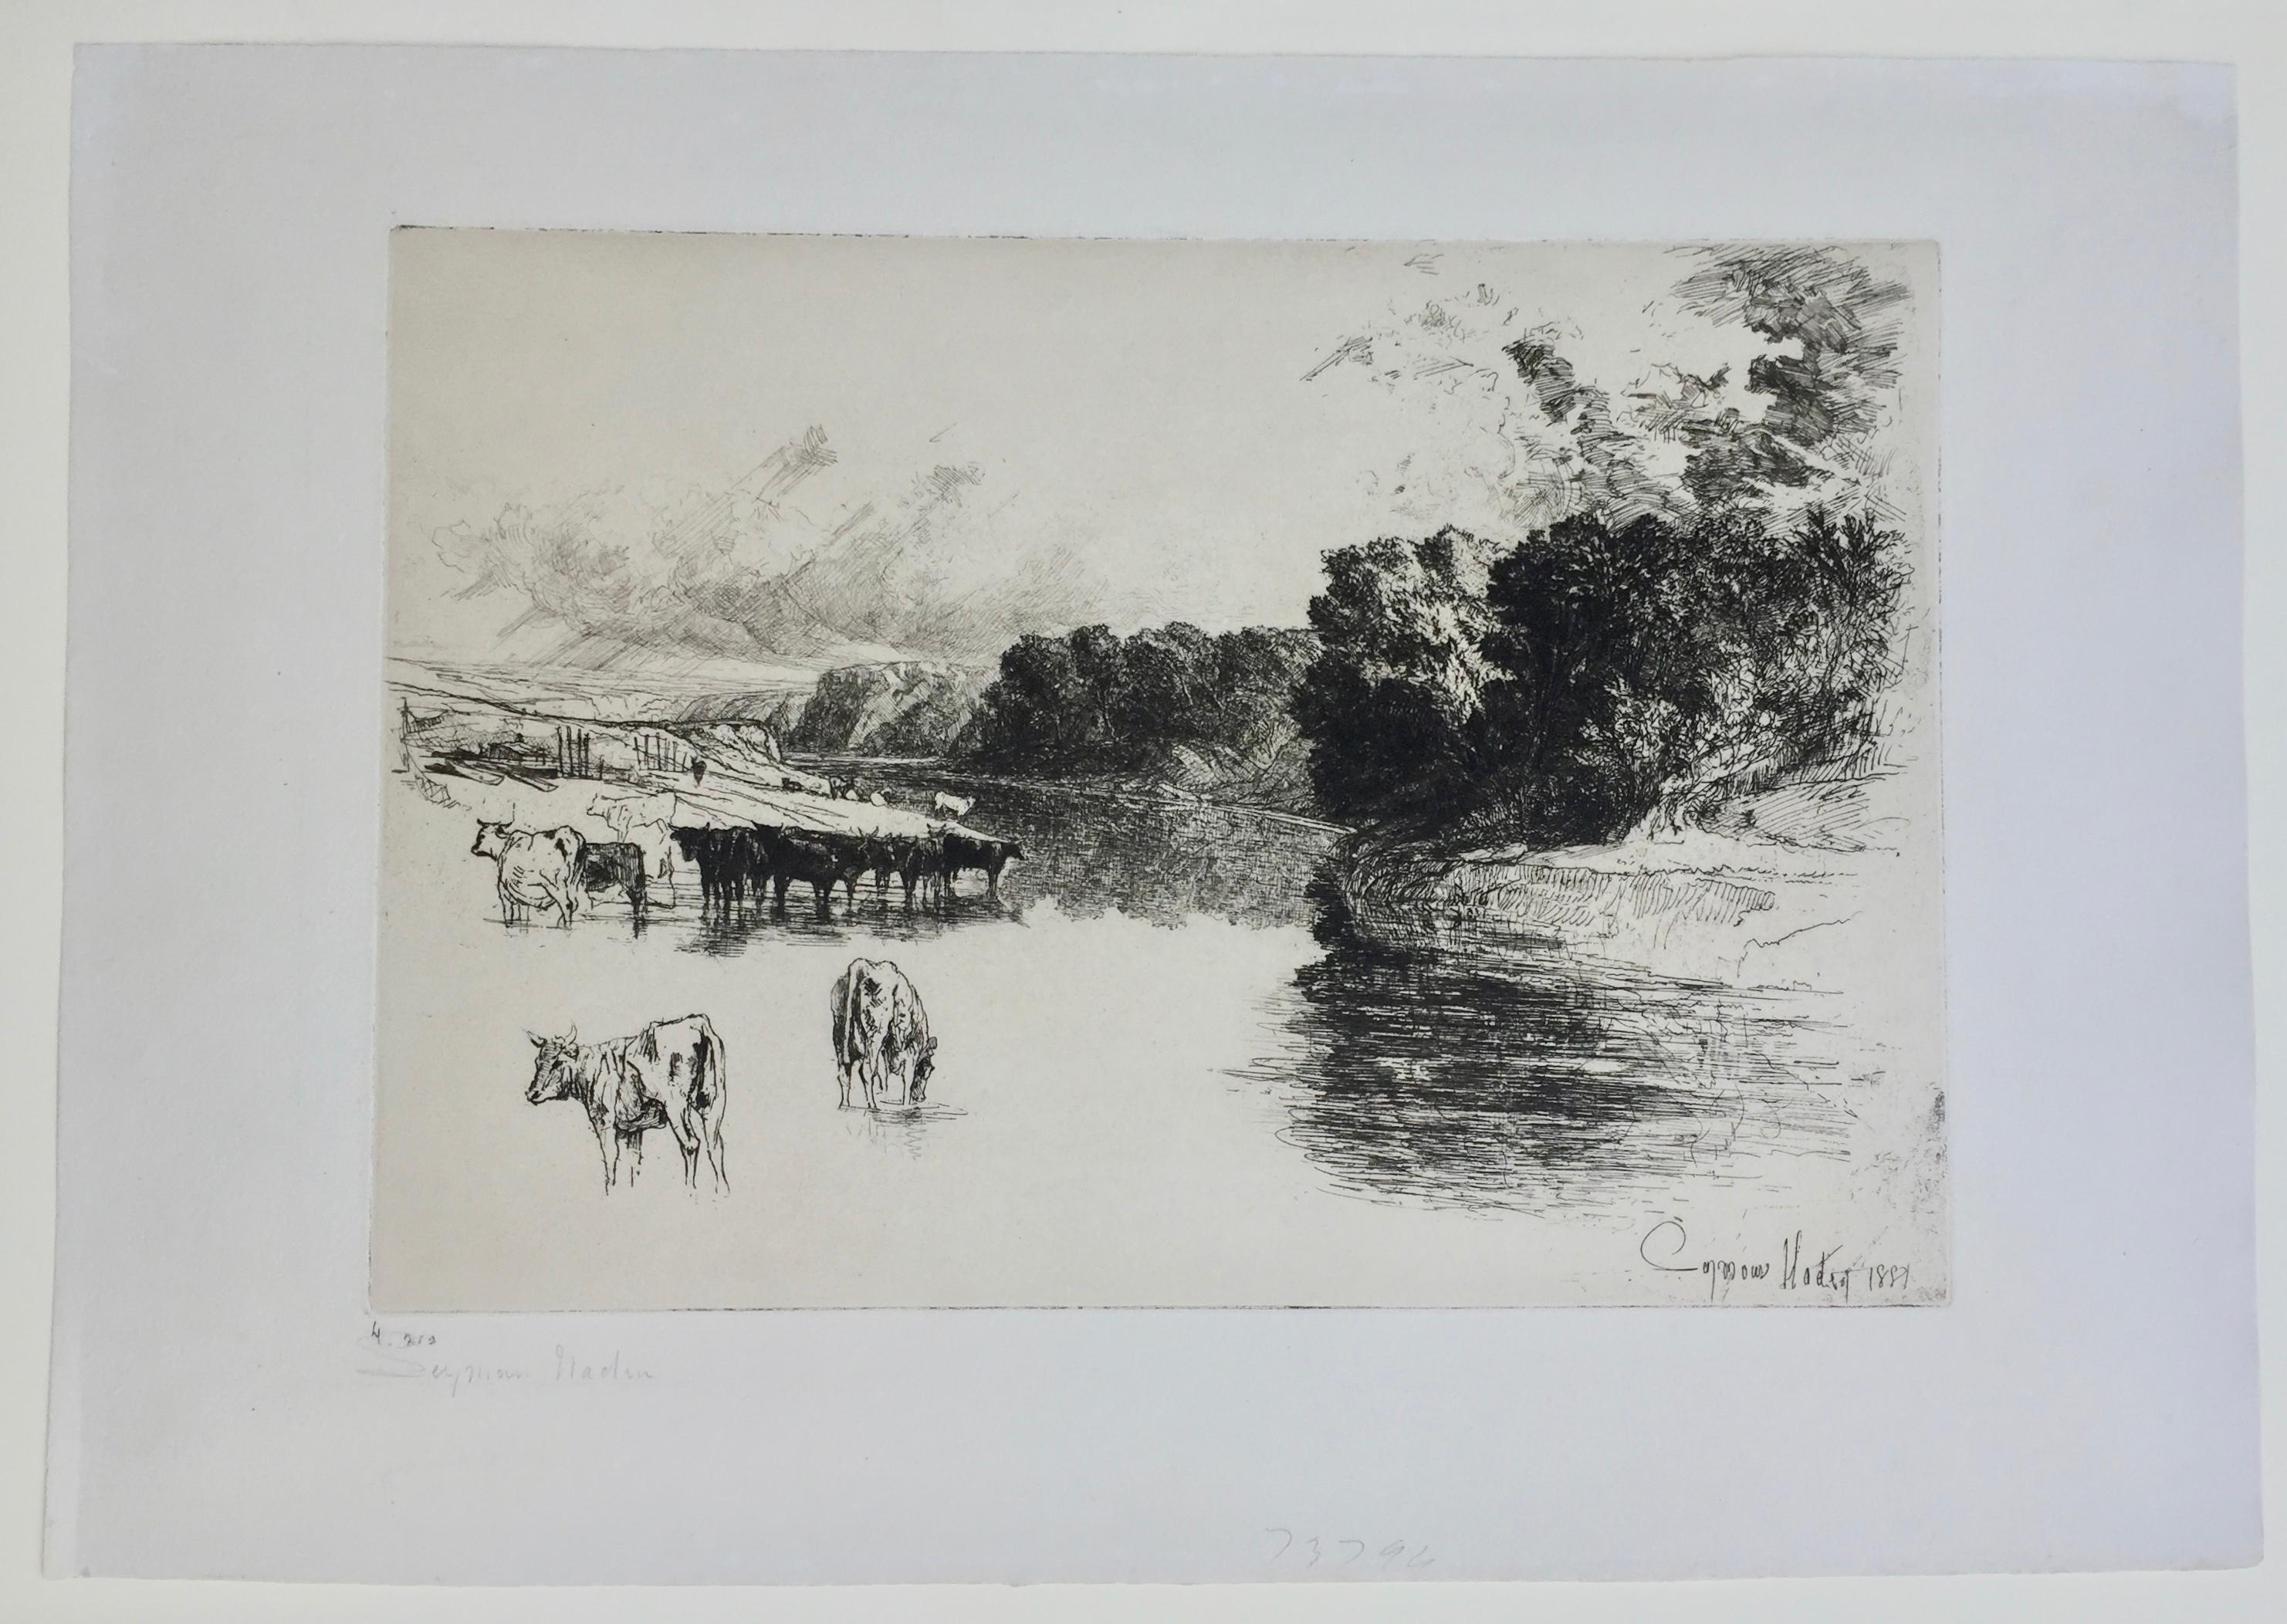 A LANCASHIRE RIVER,  - Print by Sir Francis Seymour Haden, R.A.